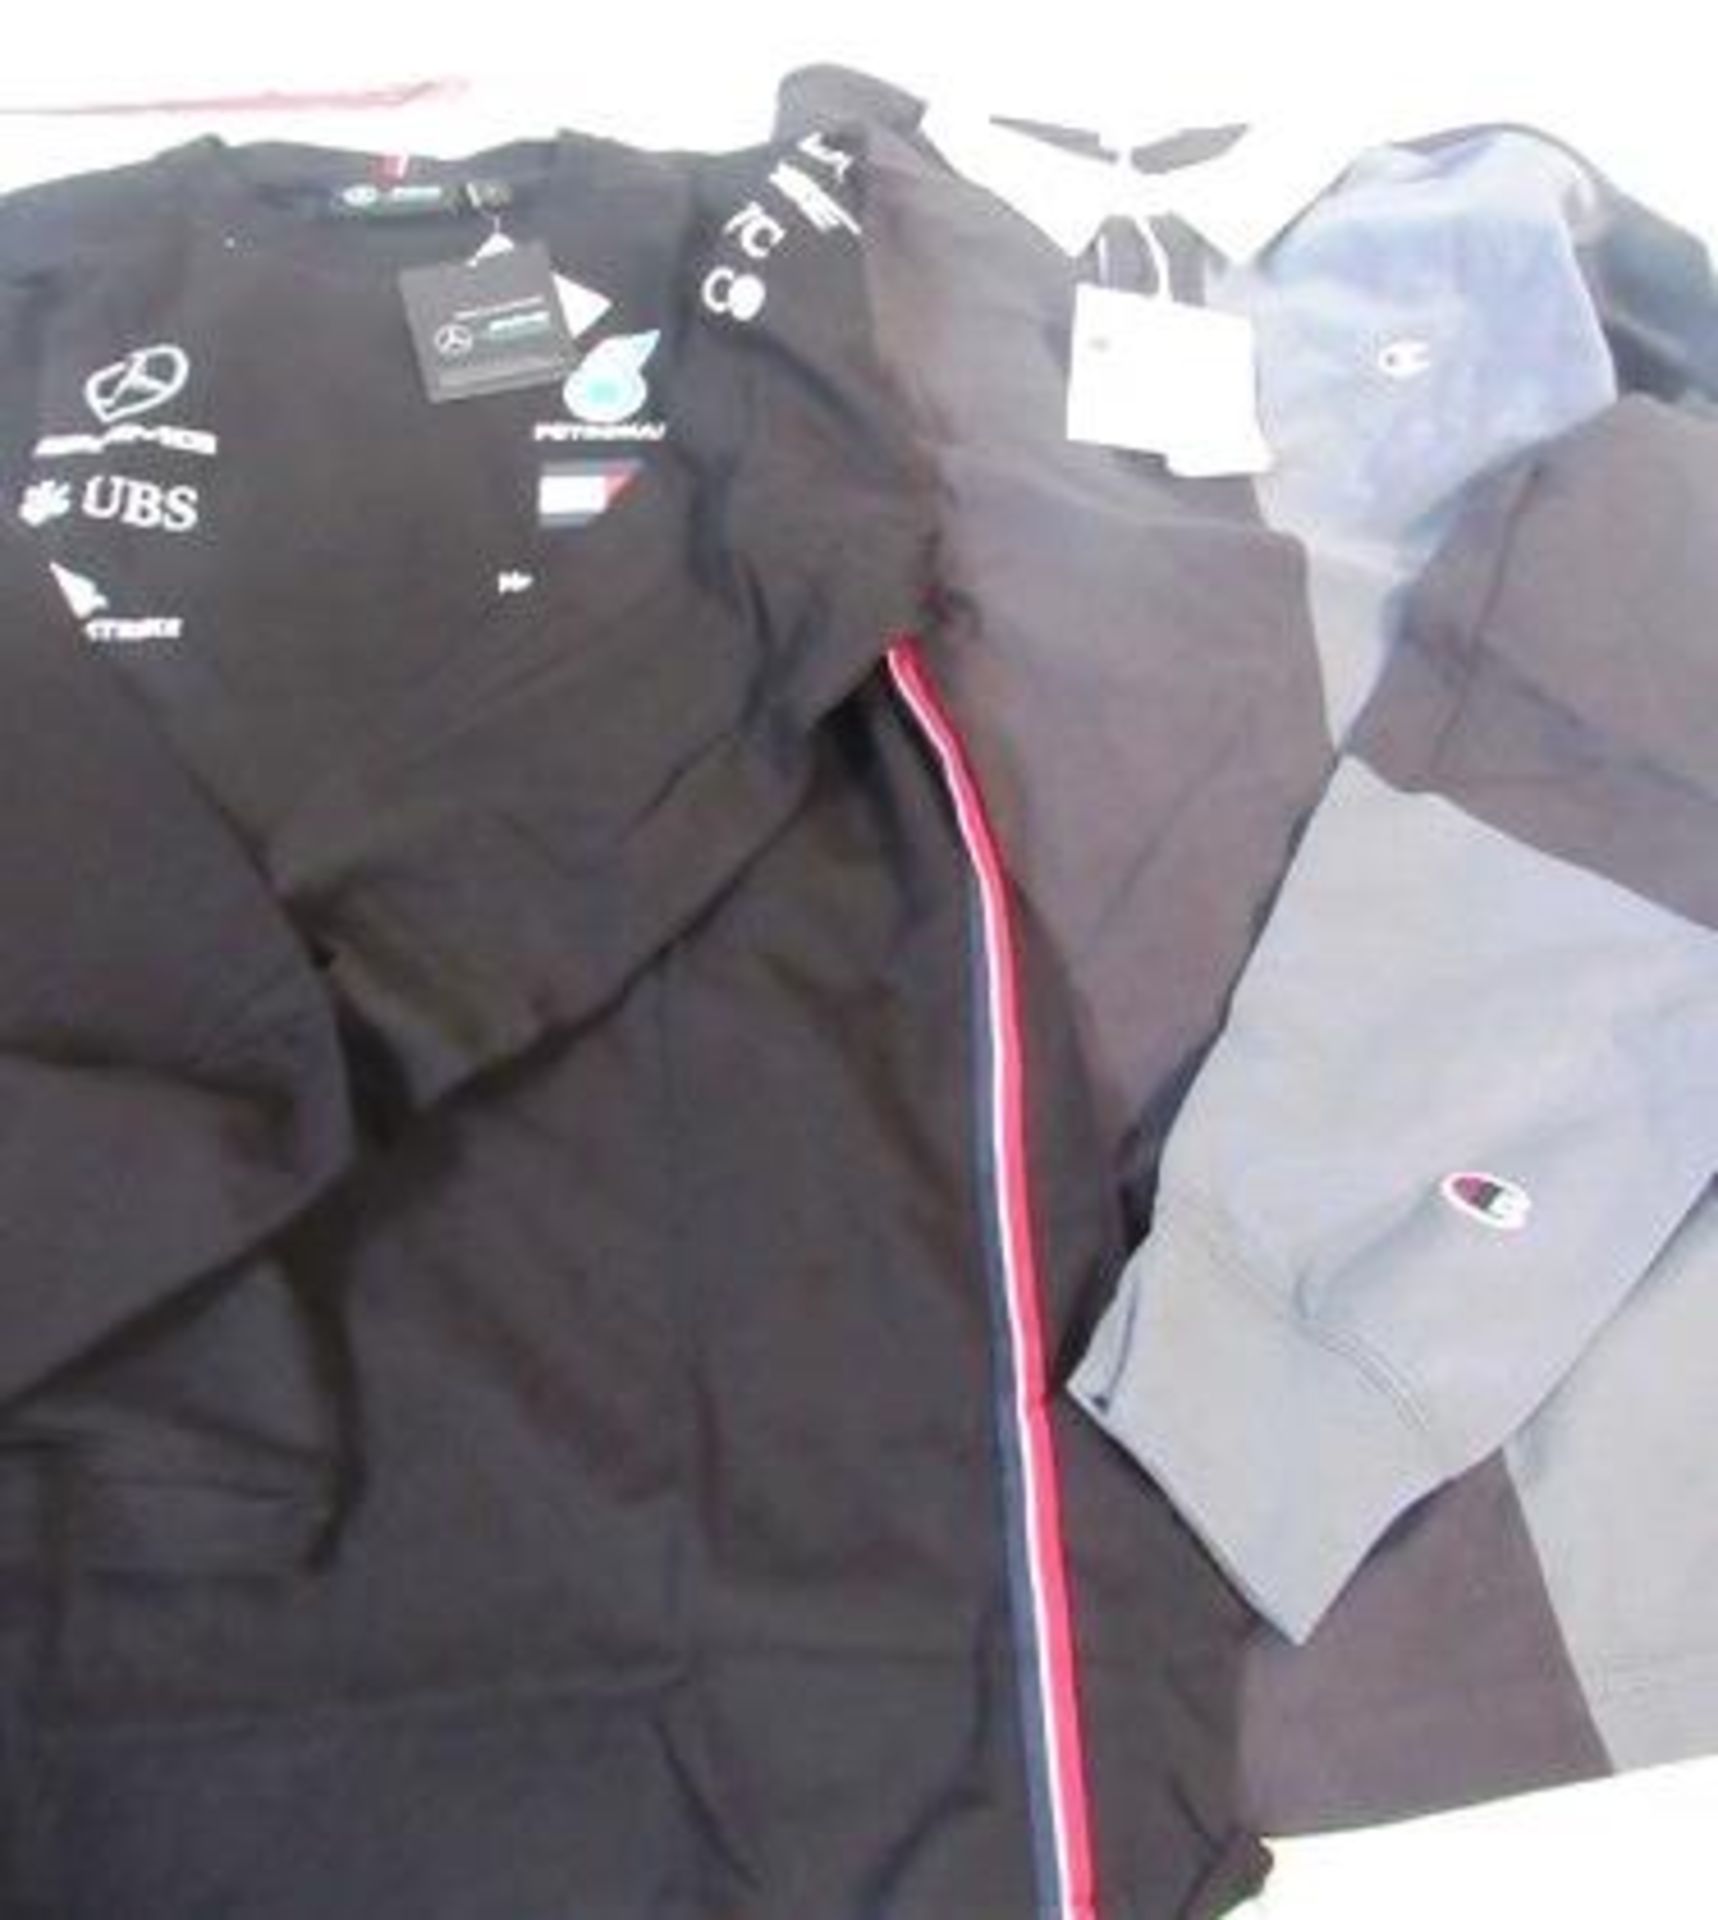 1 x Official AMG Petronas long sleeve top, size large and 1 x Champion long sleeve top, size M - New